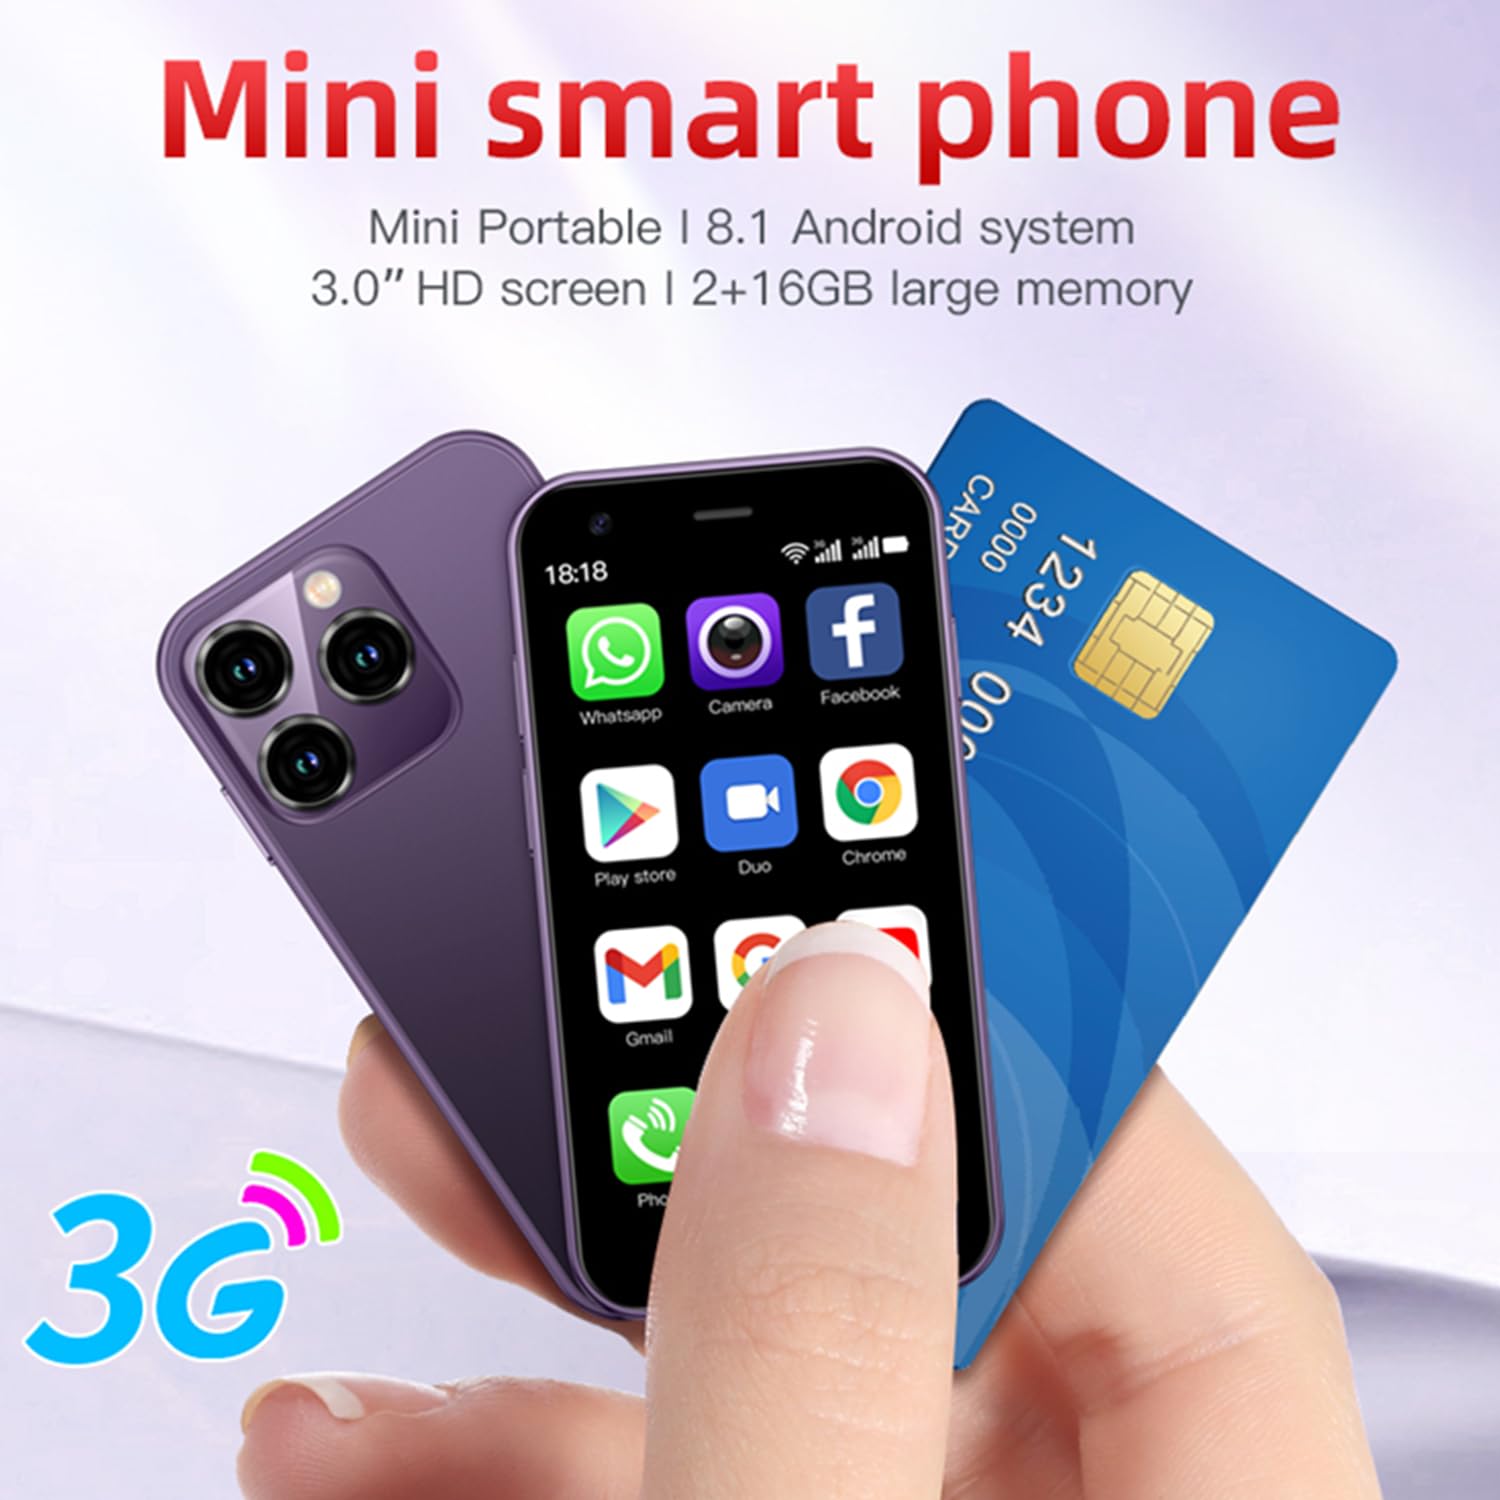 SOYES XS15 3G Mini Smartphone 3.0 Inch WiFi GPS Quad Core Android 8.1 Cell Phones Slim Body HD Camera Dual Sim Google Play Cute Palm Smartphone 2GB RAM 16GB ROM China Mobile (Purple)